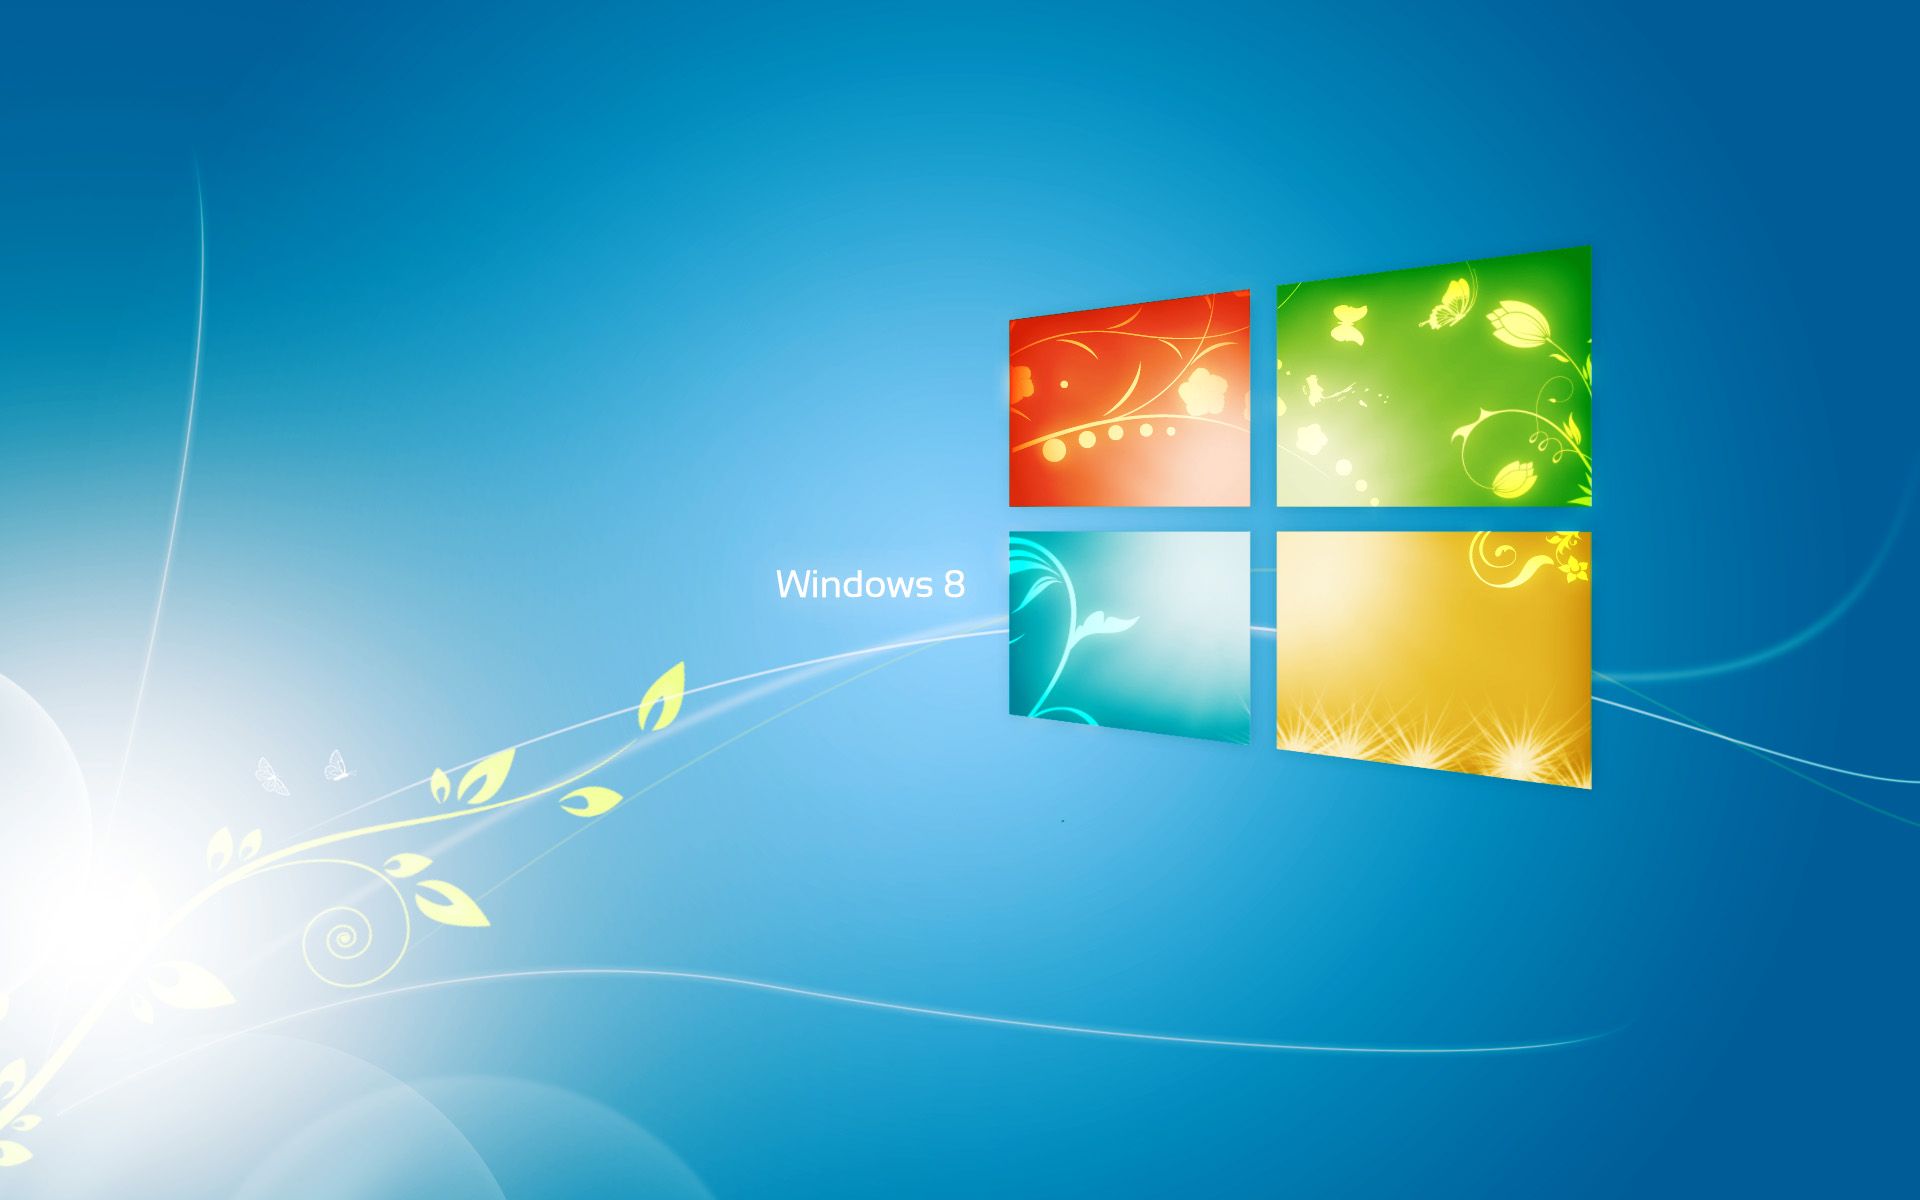 Windows 8 Wallpapers for Desktop 1920x1200px